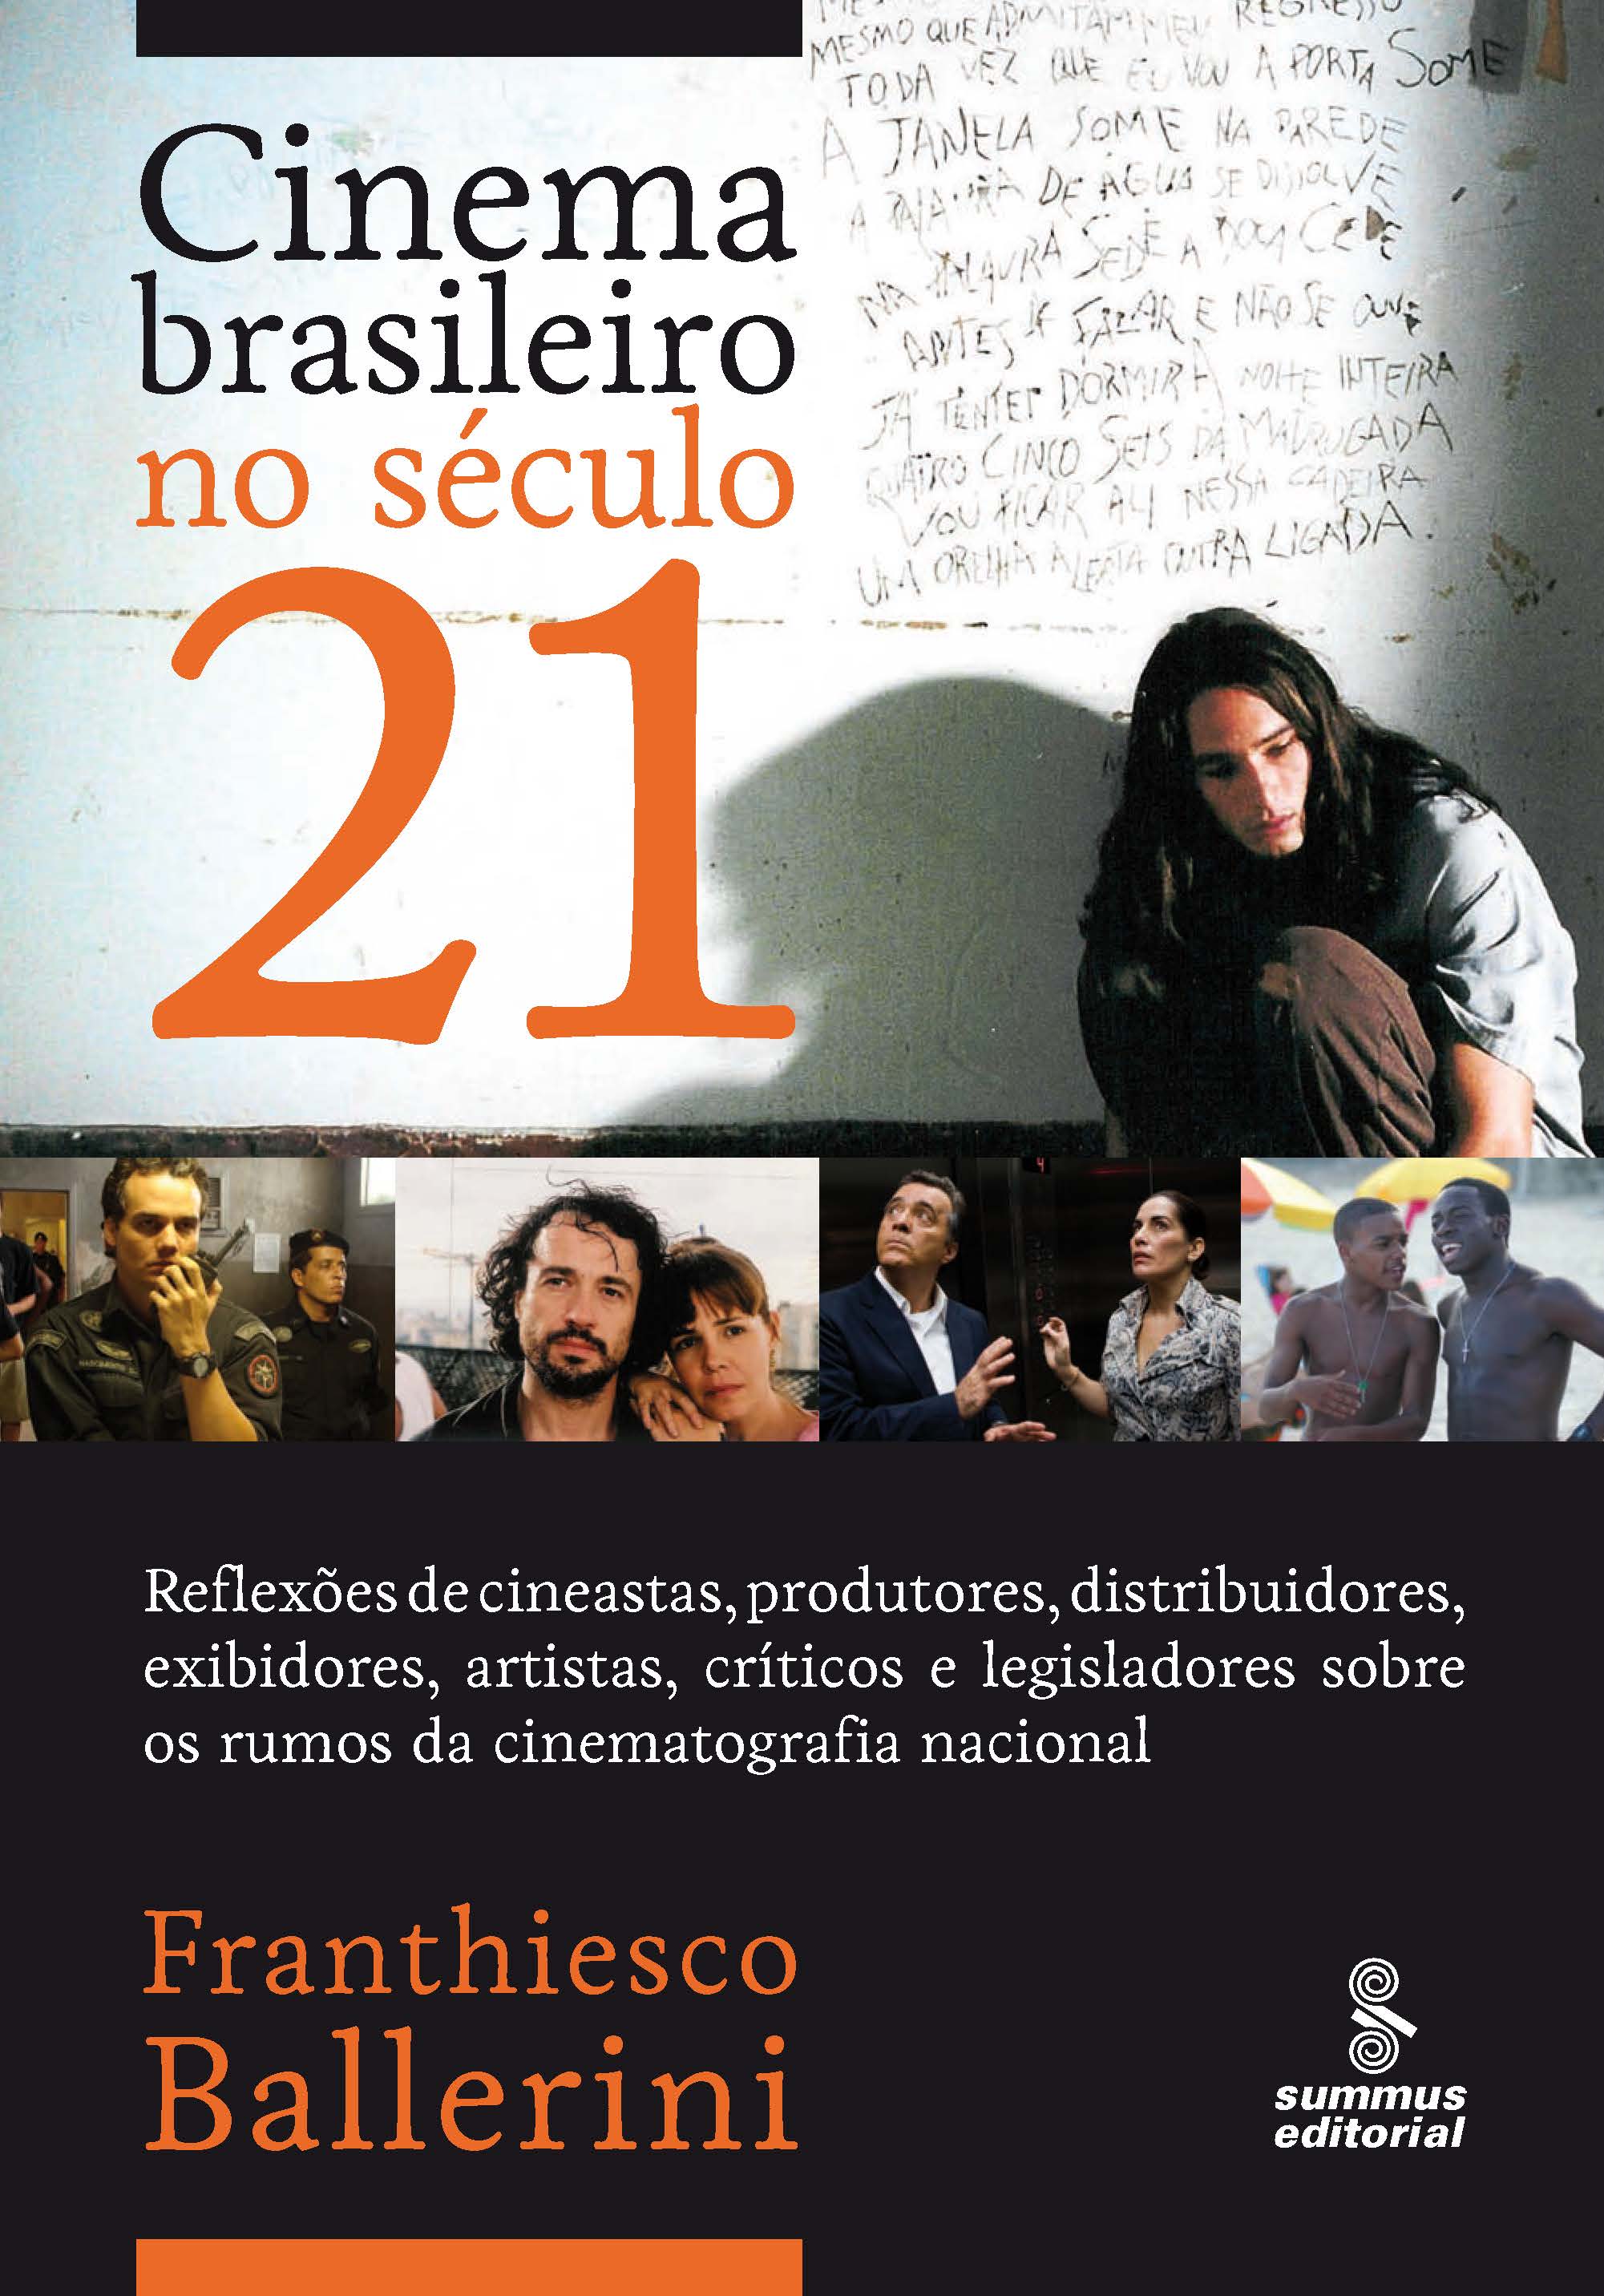 CINEMA BRASILEIRO NO SECULO 21